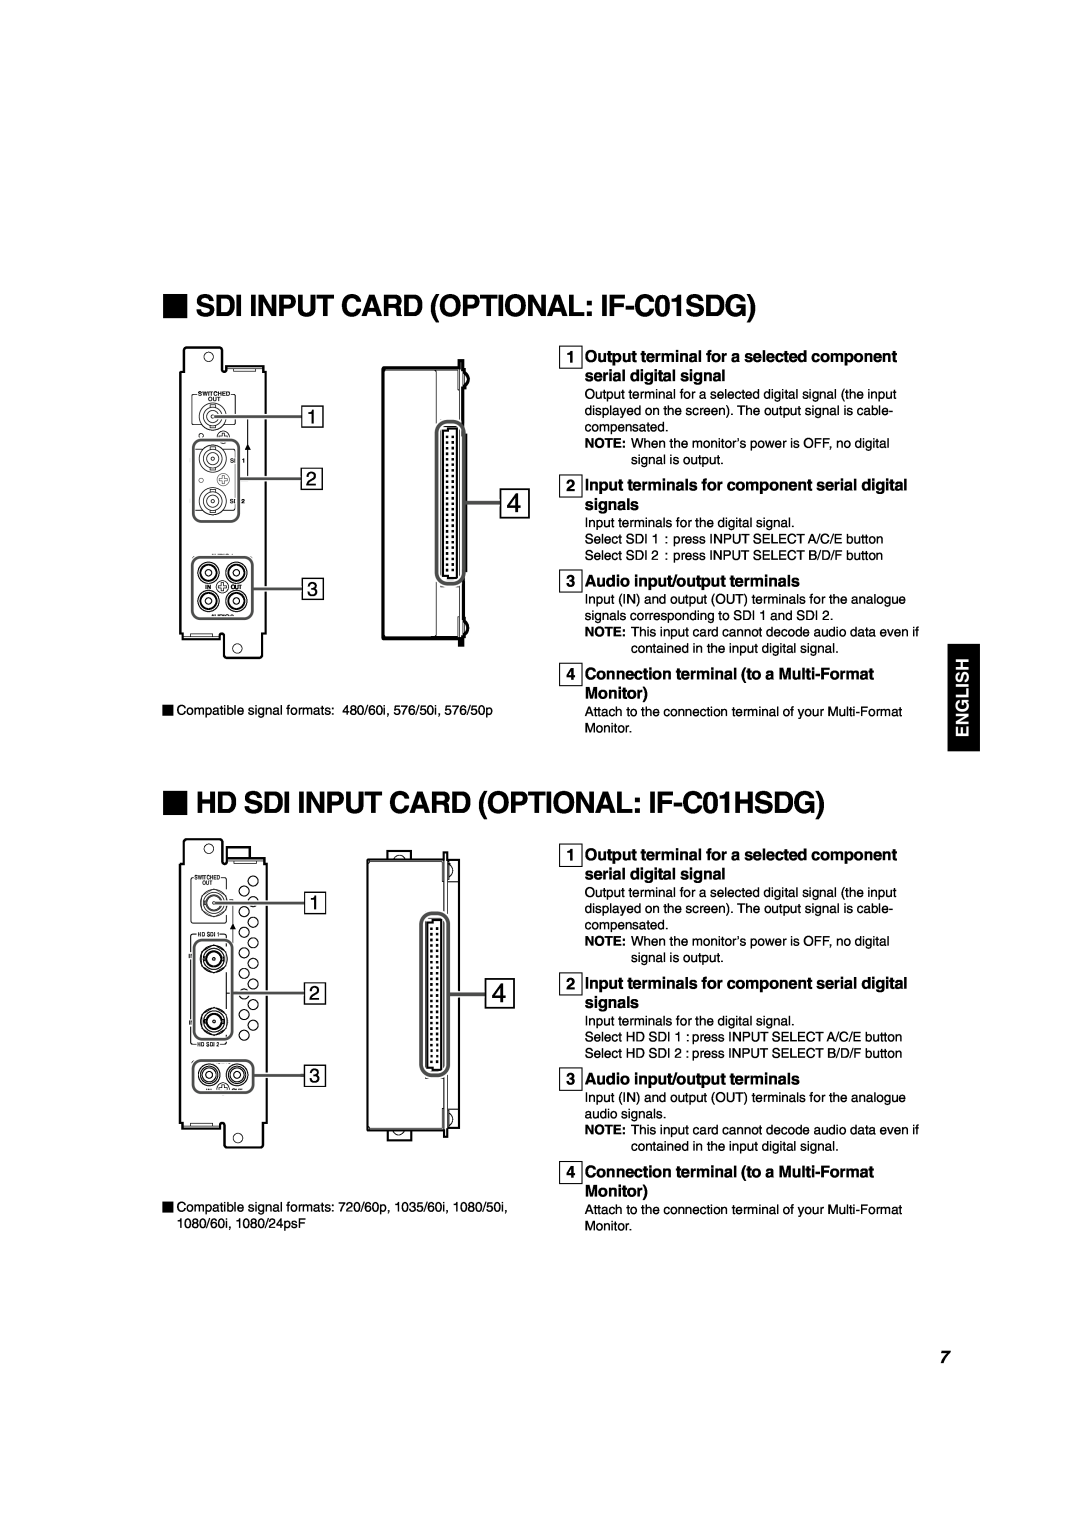 JVC DT-V1900CG manual  SDI INPUT CARD OPTIONAL IF-C01SDG,  HD SDI INPUT CARD OPTIONAL IF-C01HSDG, English 